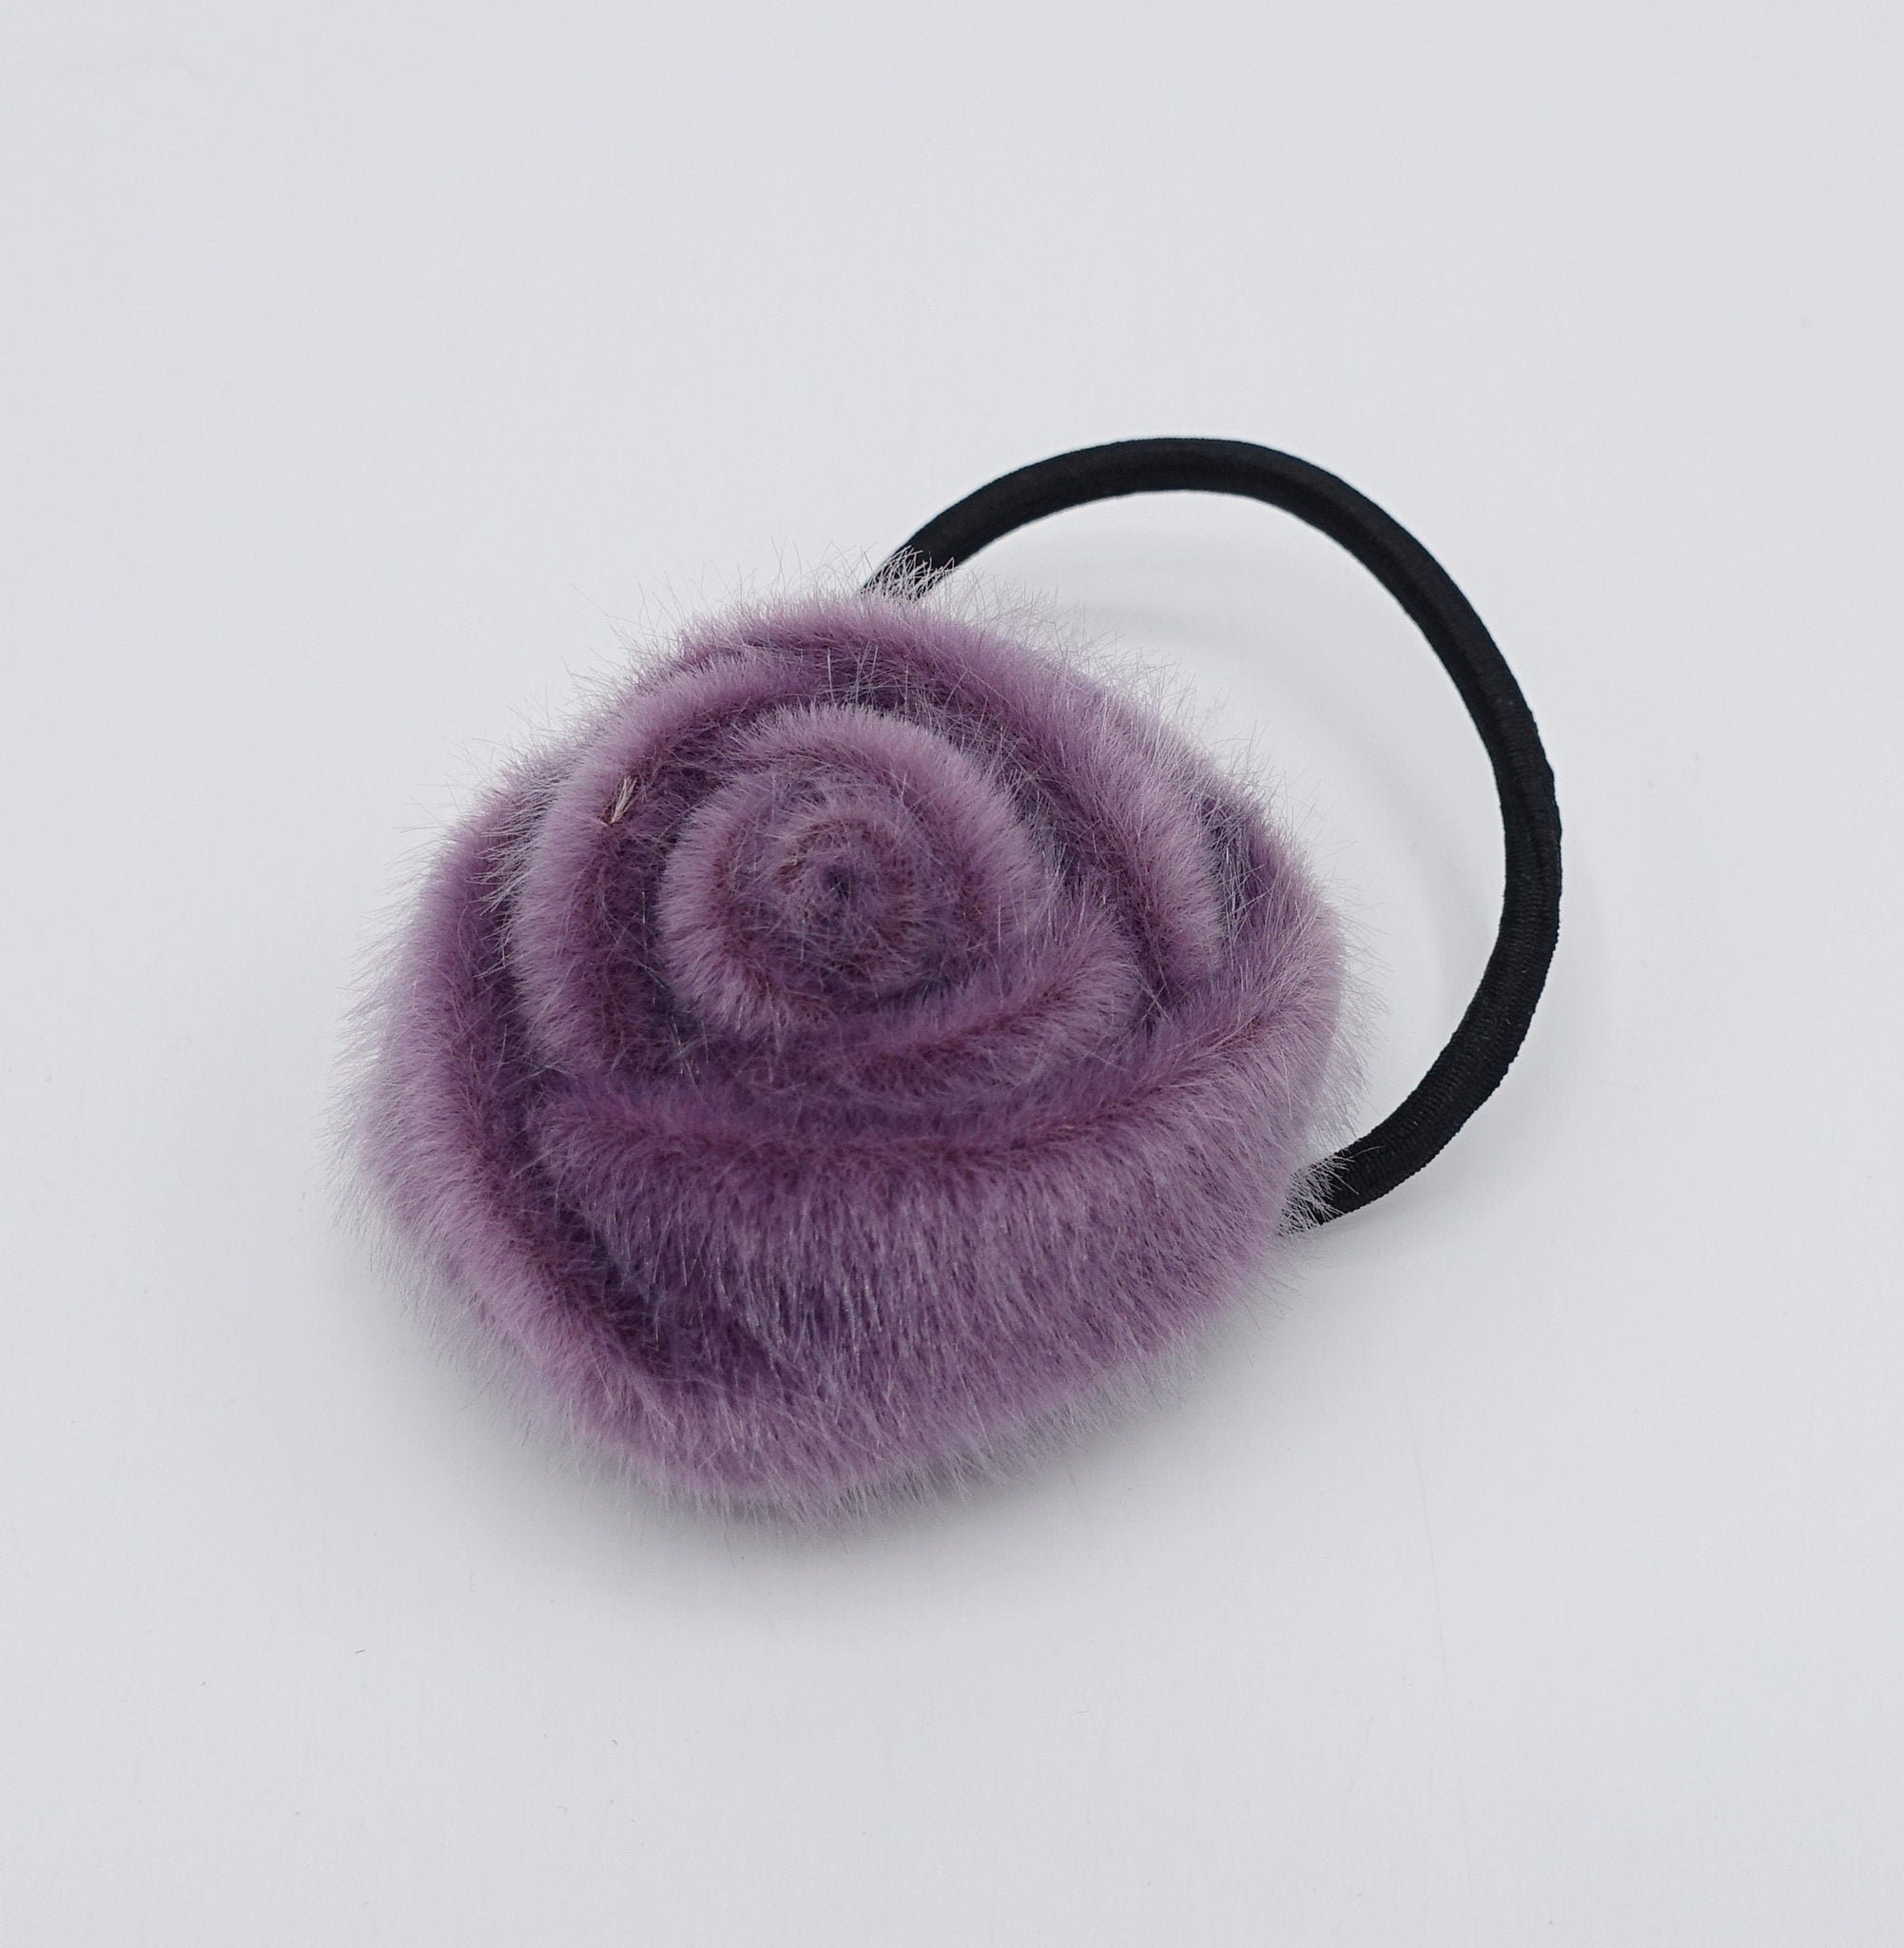 VeryShine Hair Accessories rose hair tie elastic ponytail holder